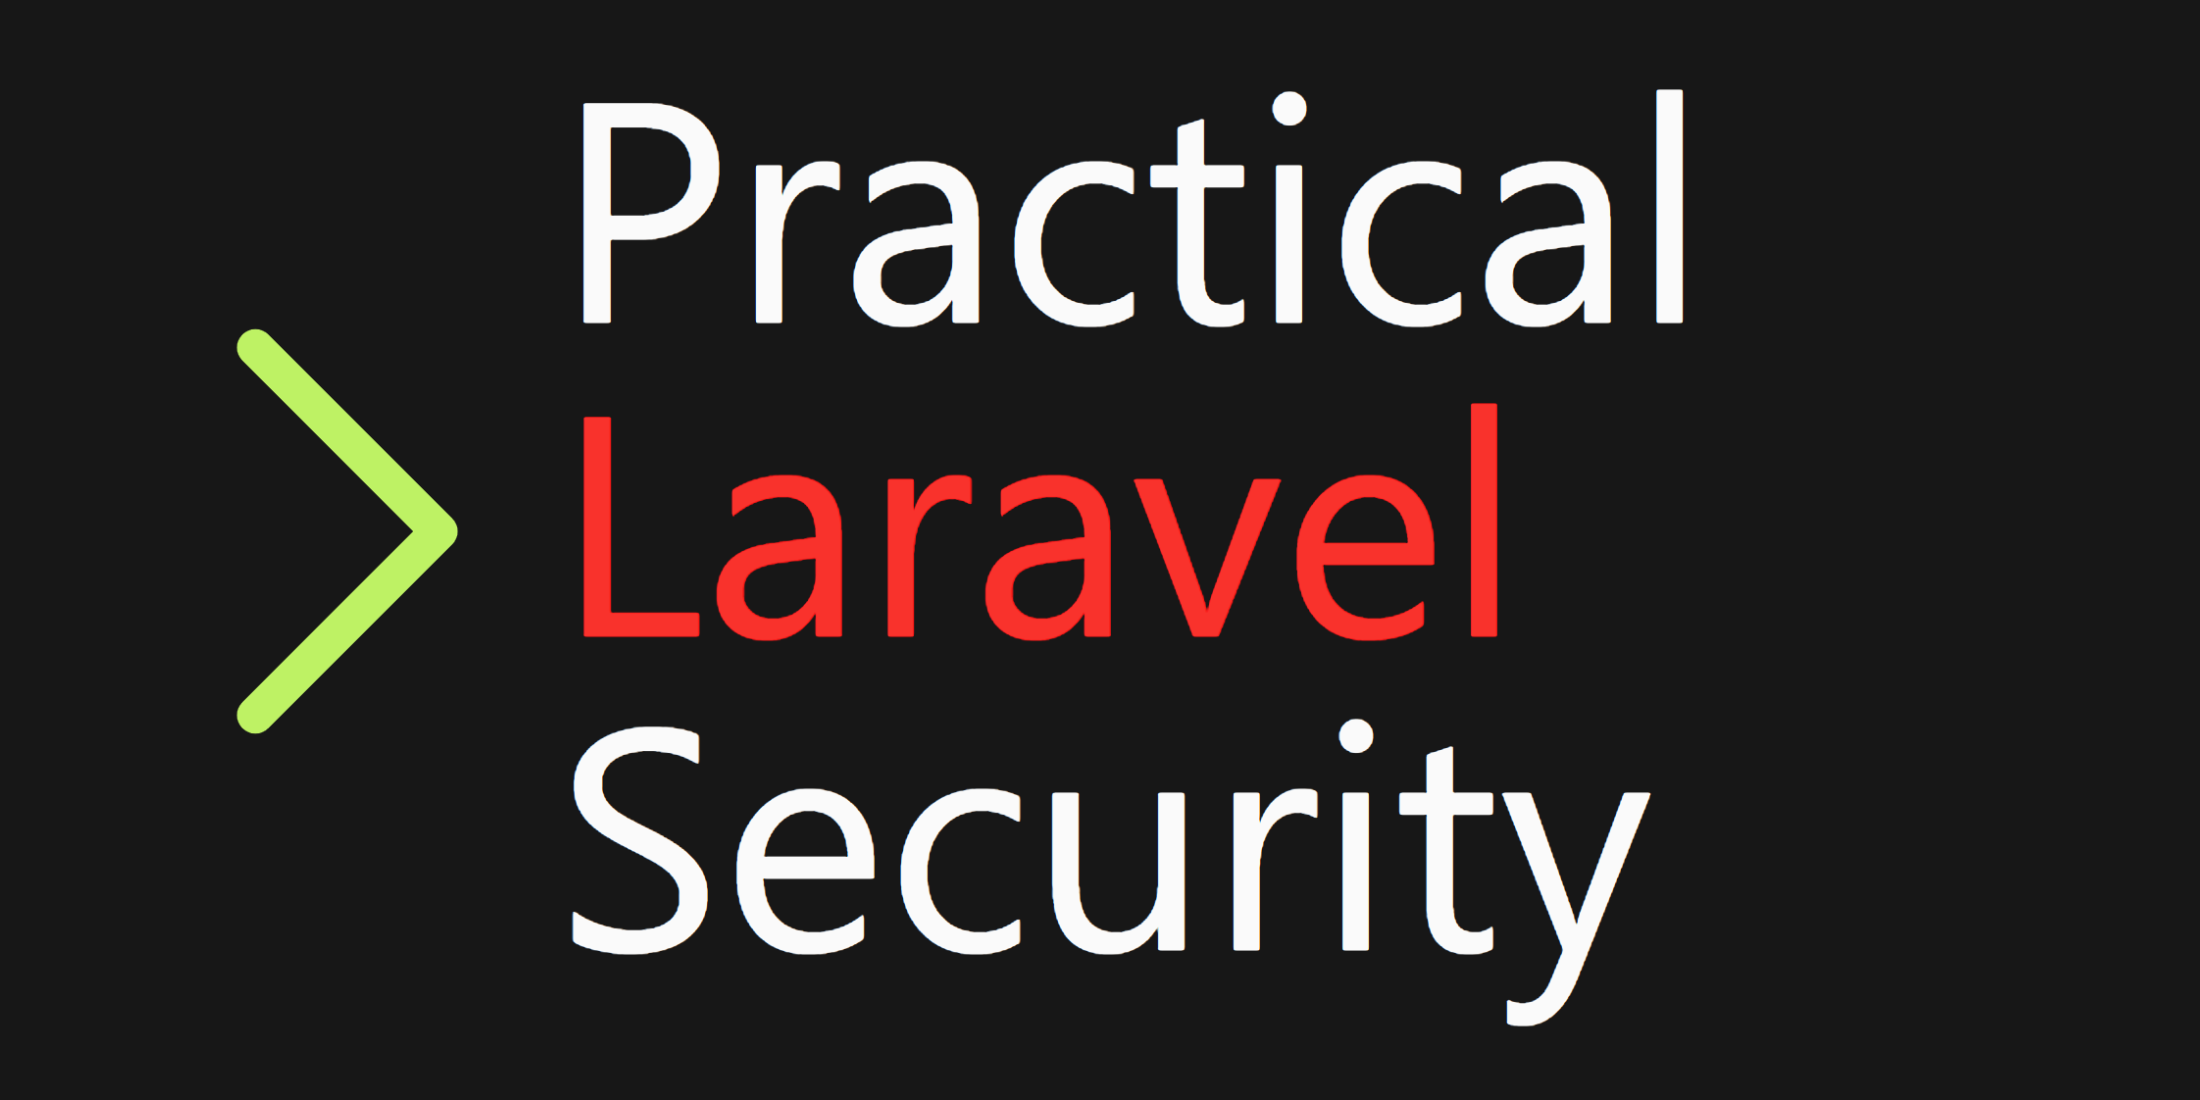 Practical Laravel Security image